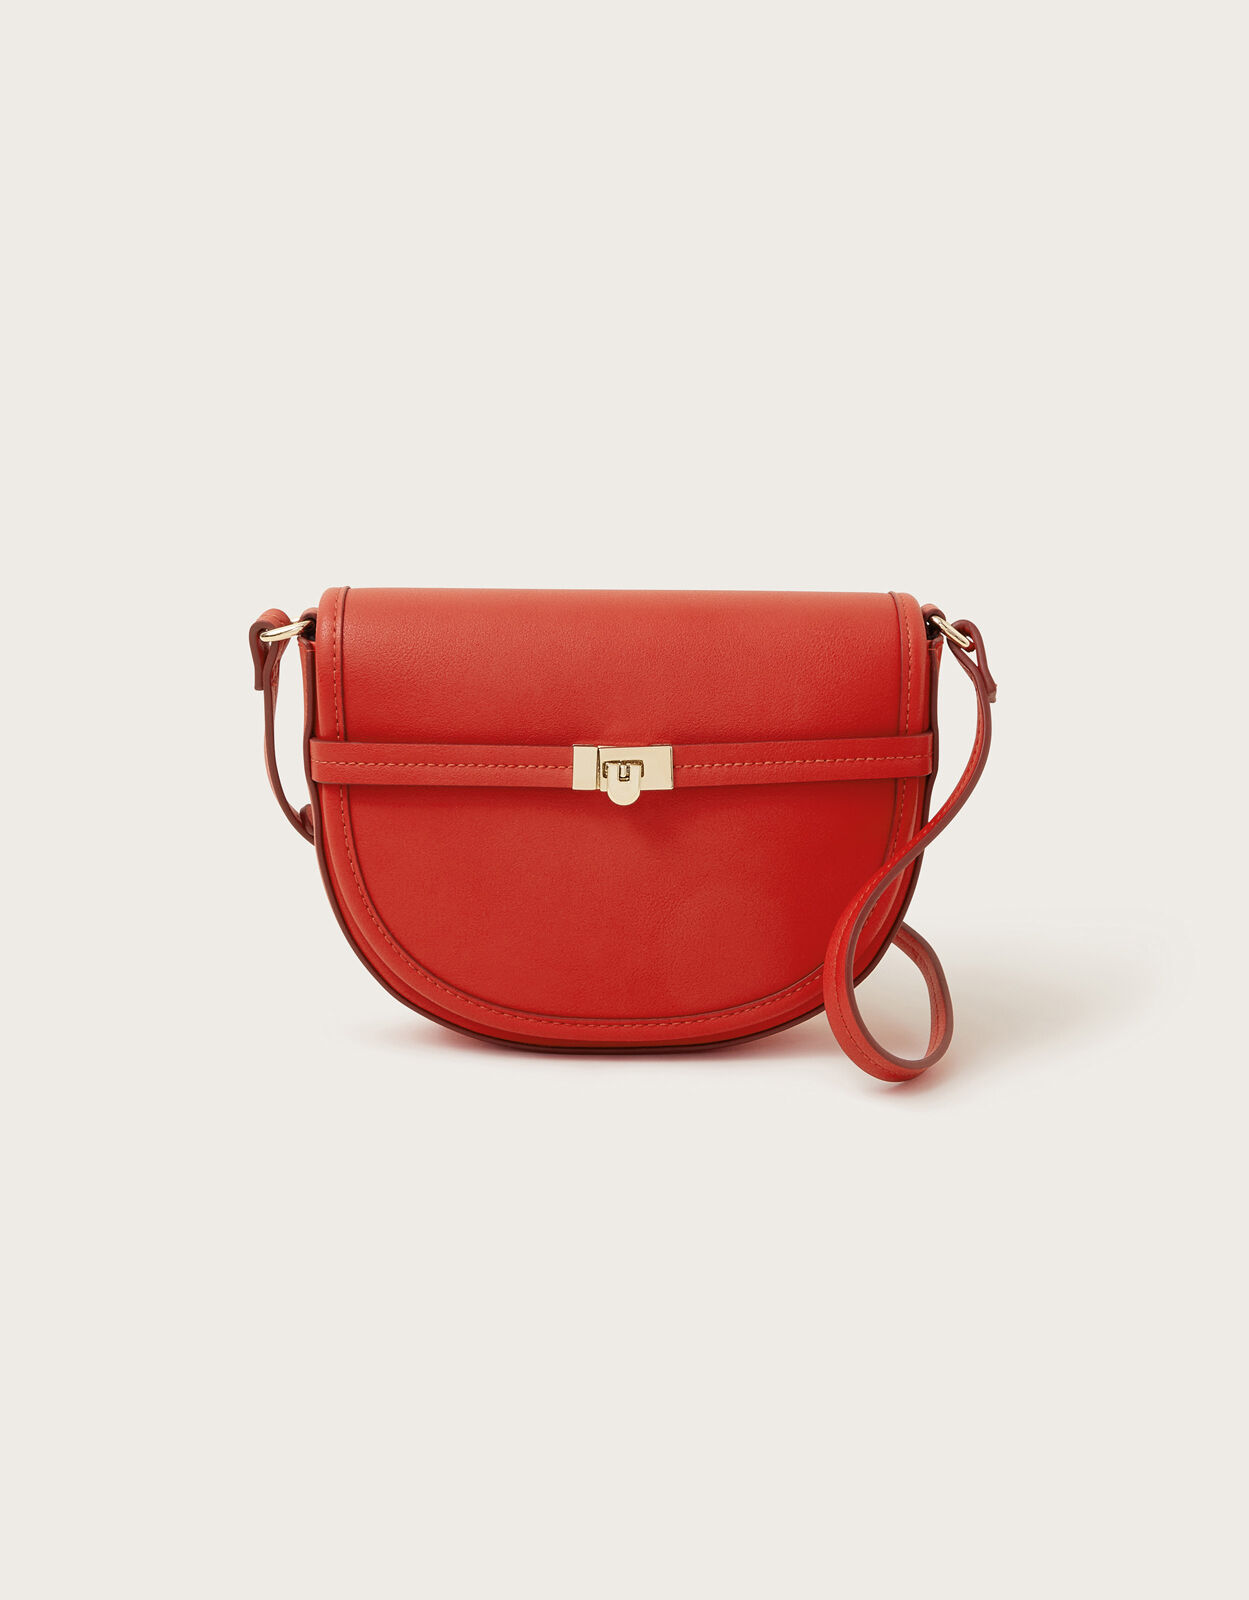 Bag Outlet | Discount Handbags & Travel Accessories | Handbag Outlet UK